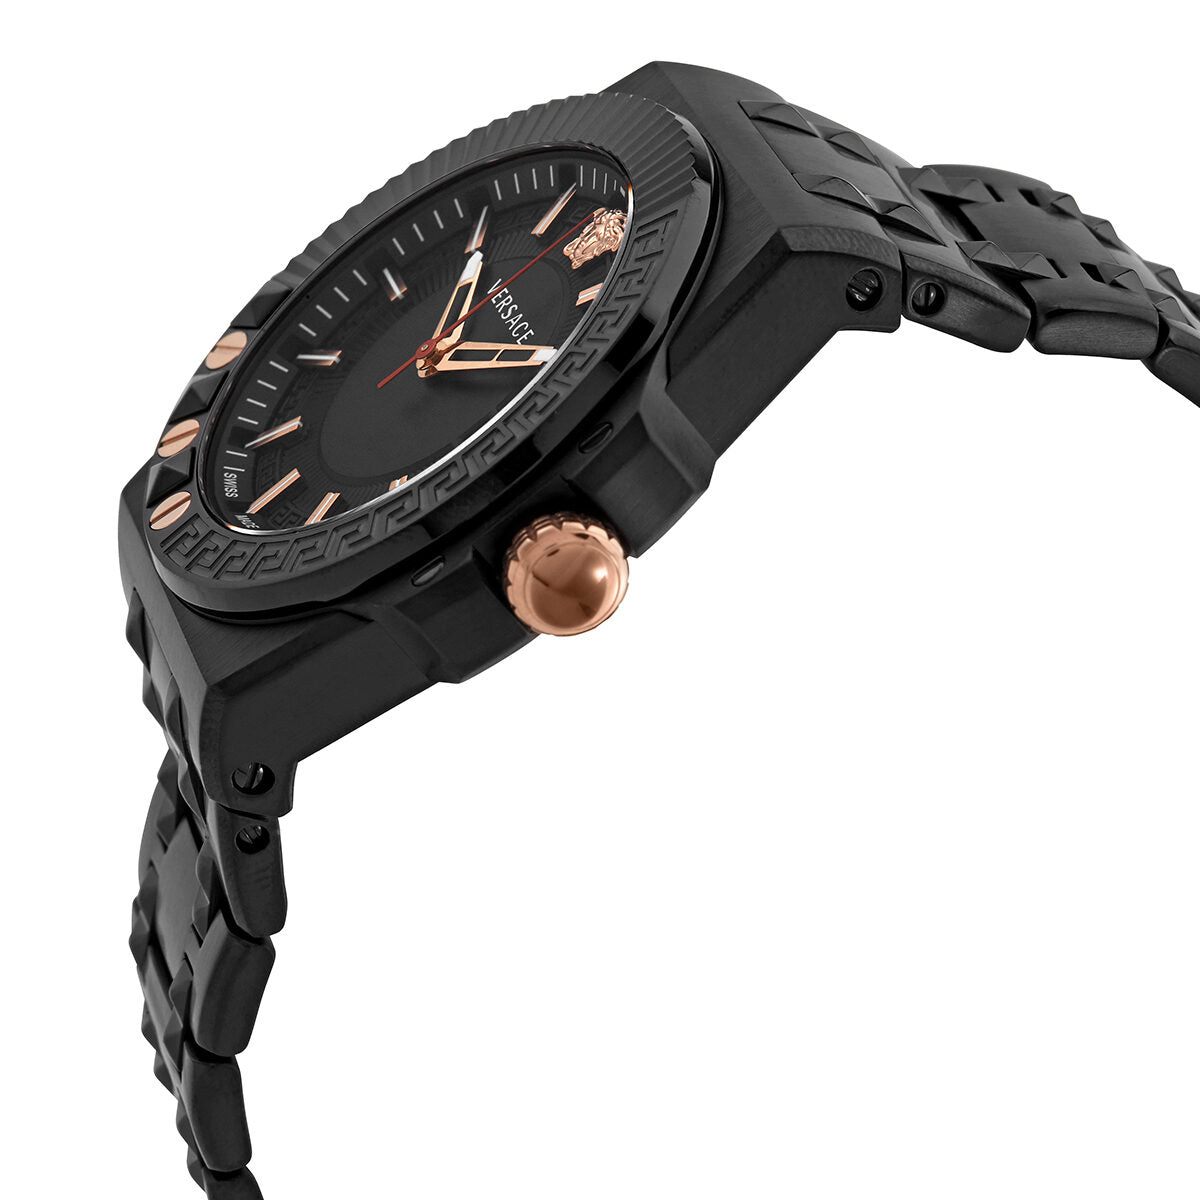 Versace Chain Reaction Quartz Black Dial Black Steel Strap Watch for Men - VEDY00719